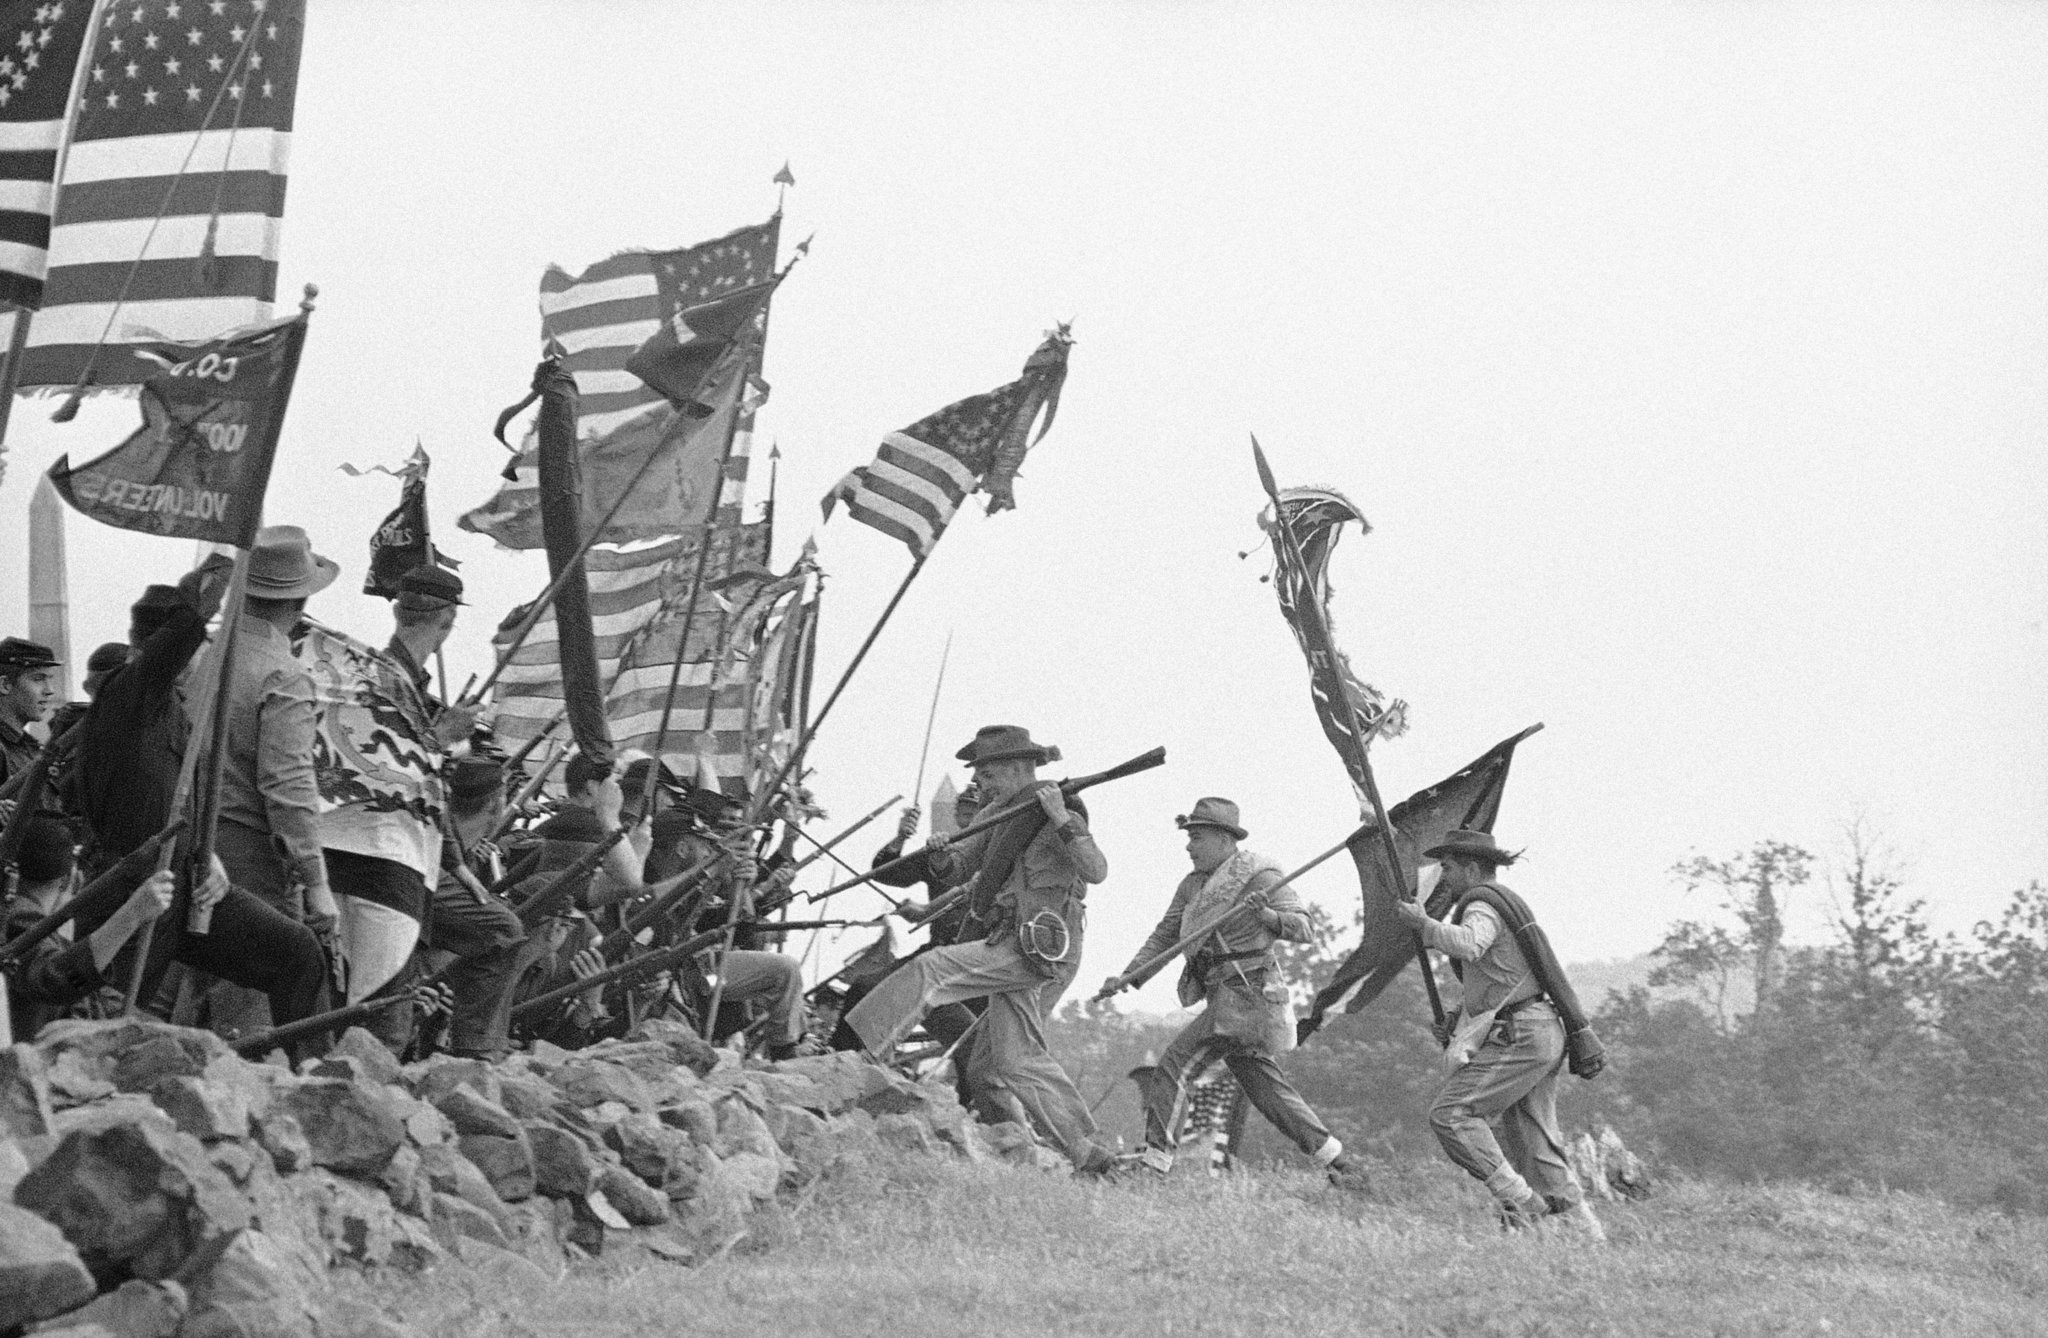 Civil War and civil rights came to a head at Gettysburg centennial ...